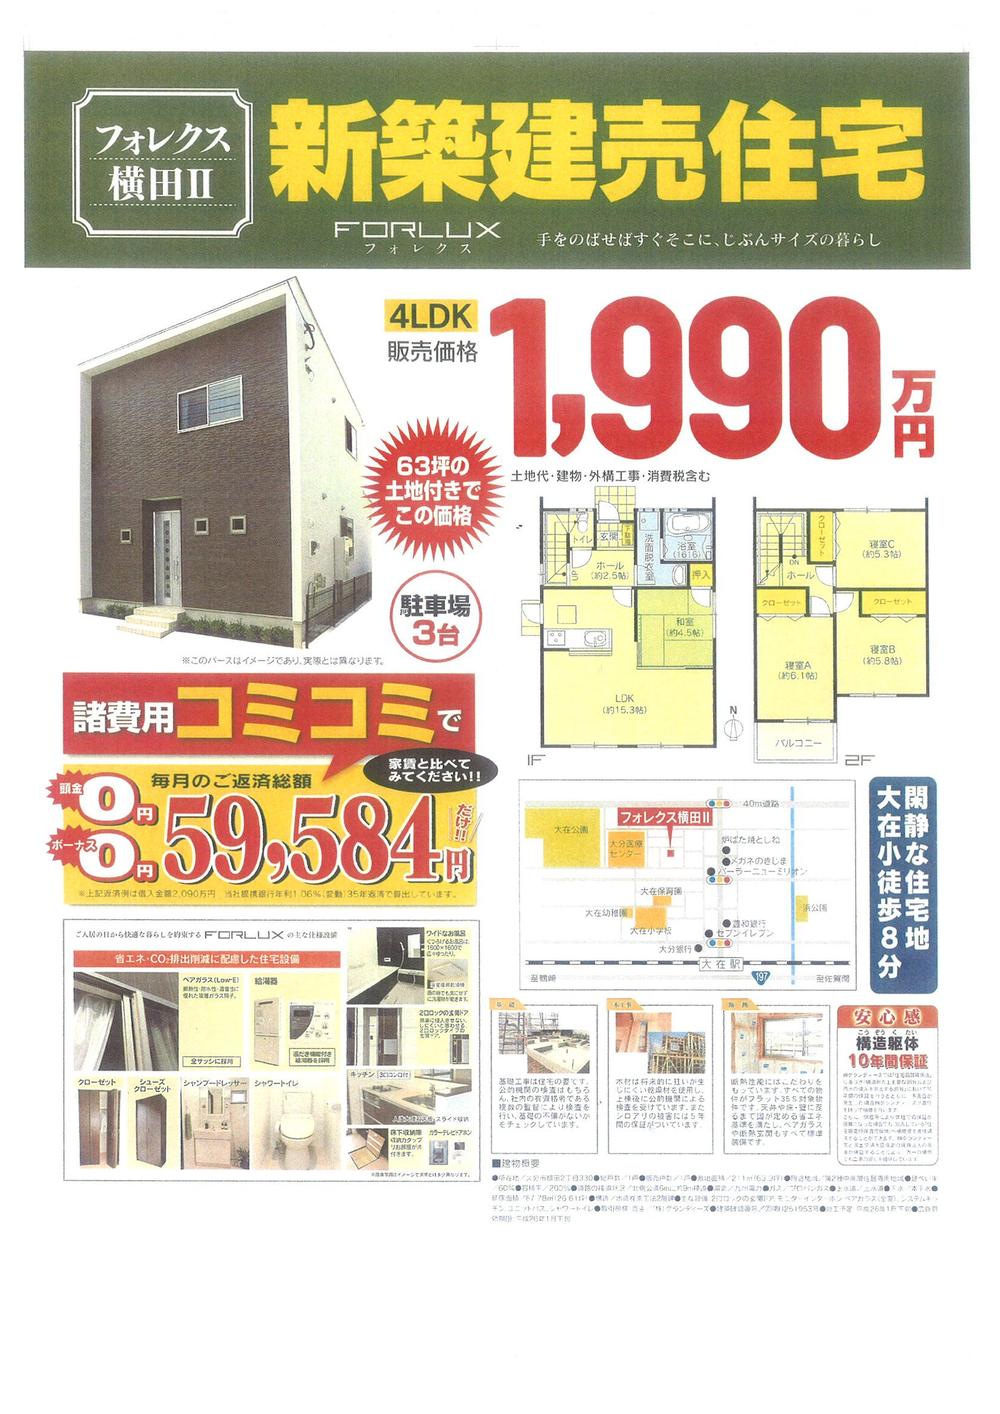 Floor plan. 19.9 million yen, 4LDK, Land area 221 sq m , Building area 87.98 sq m completed image view